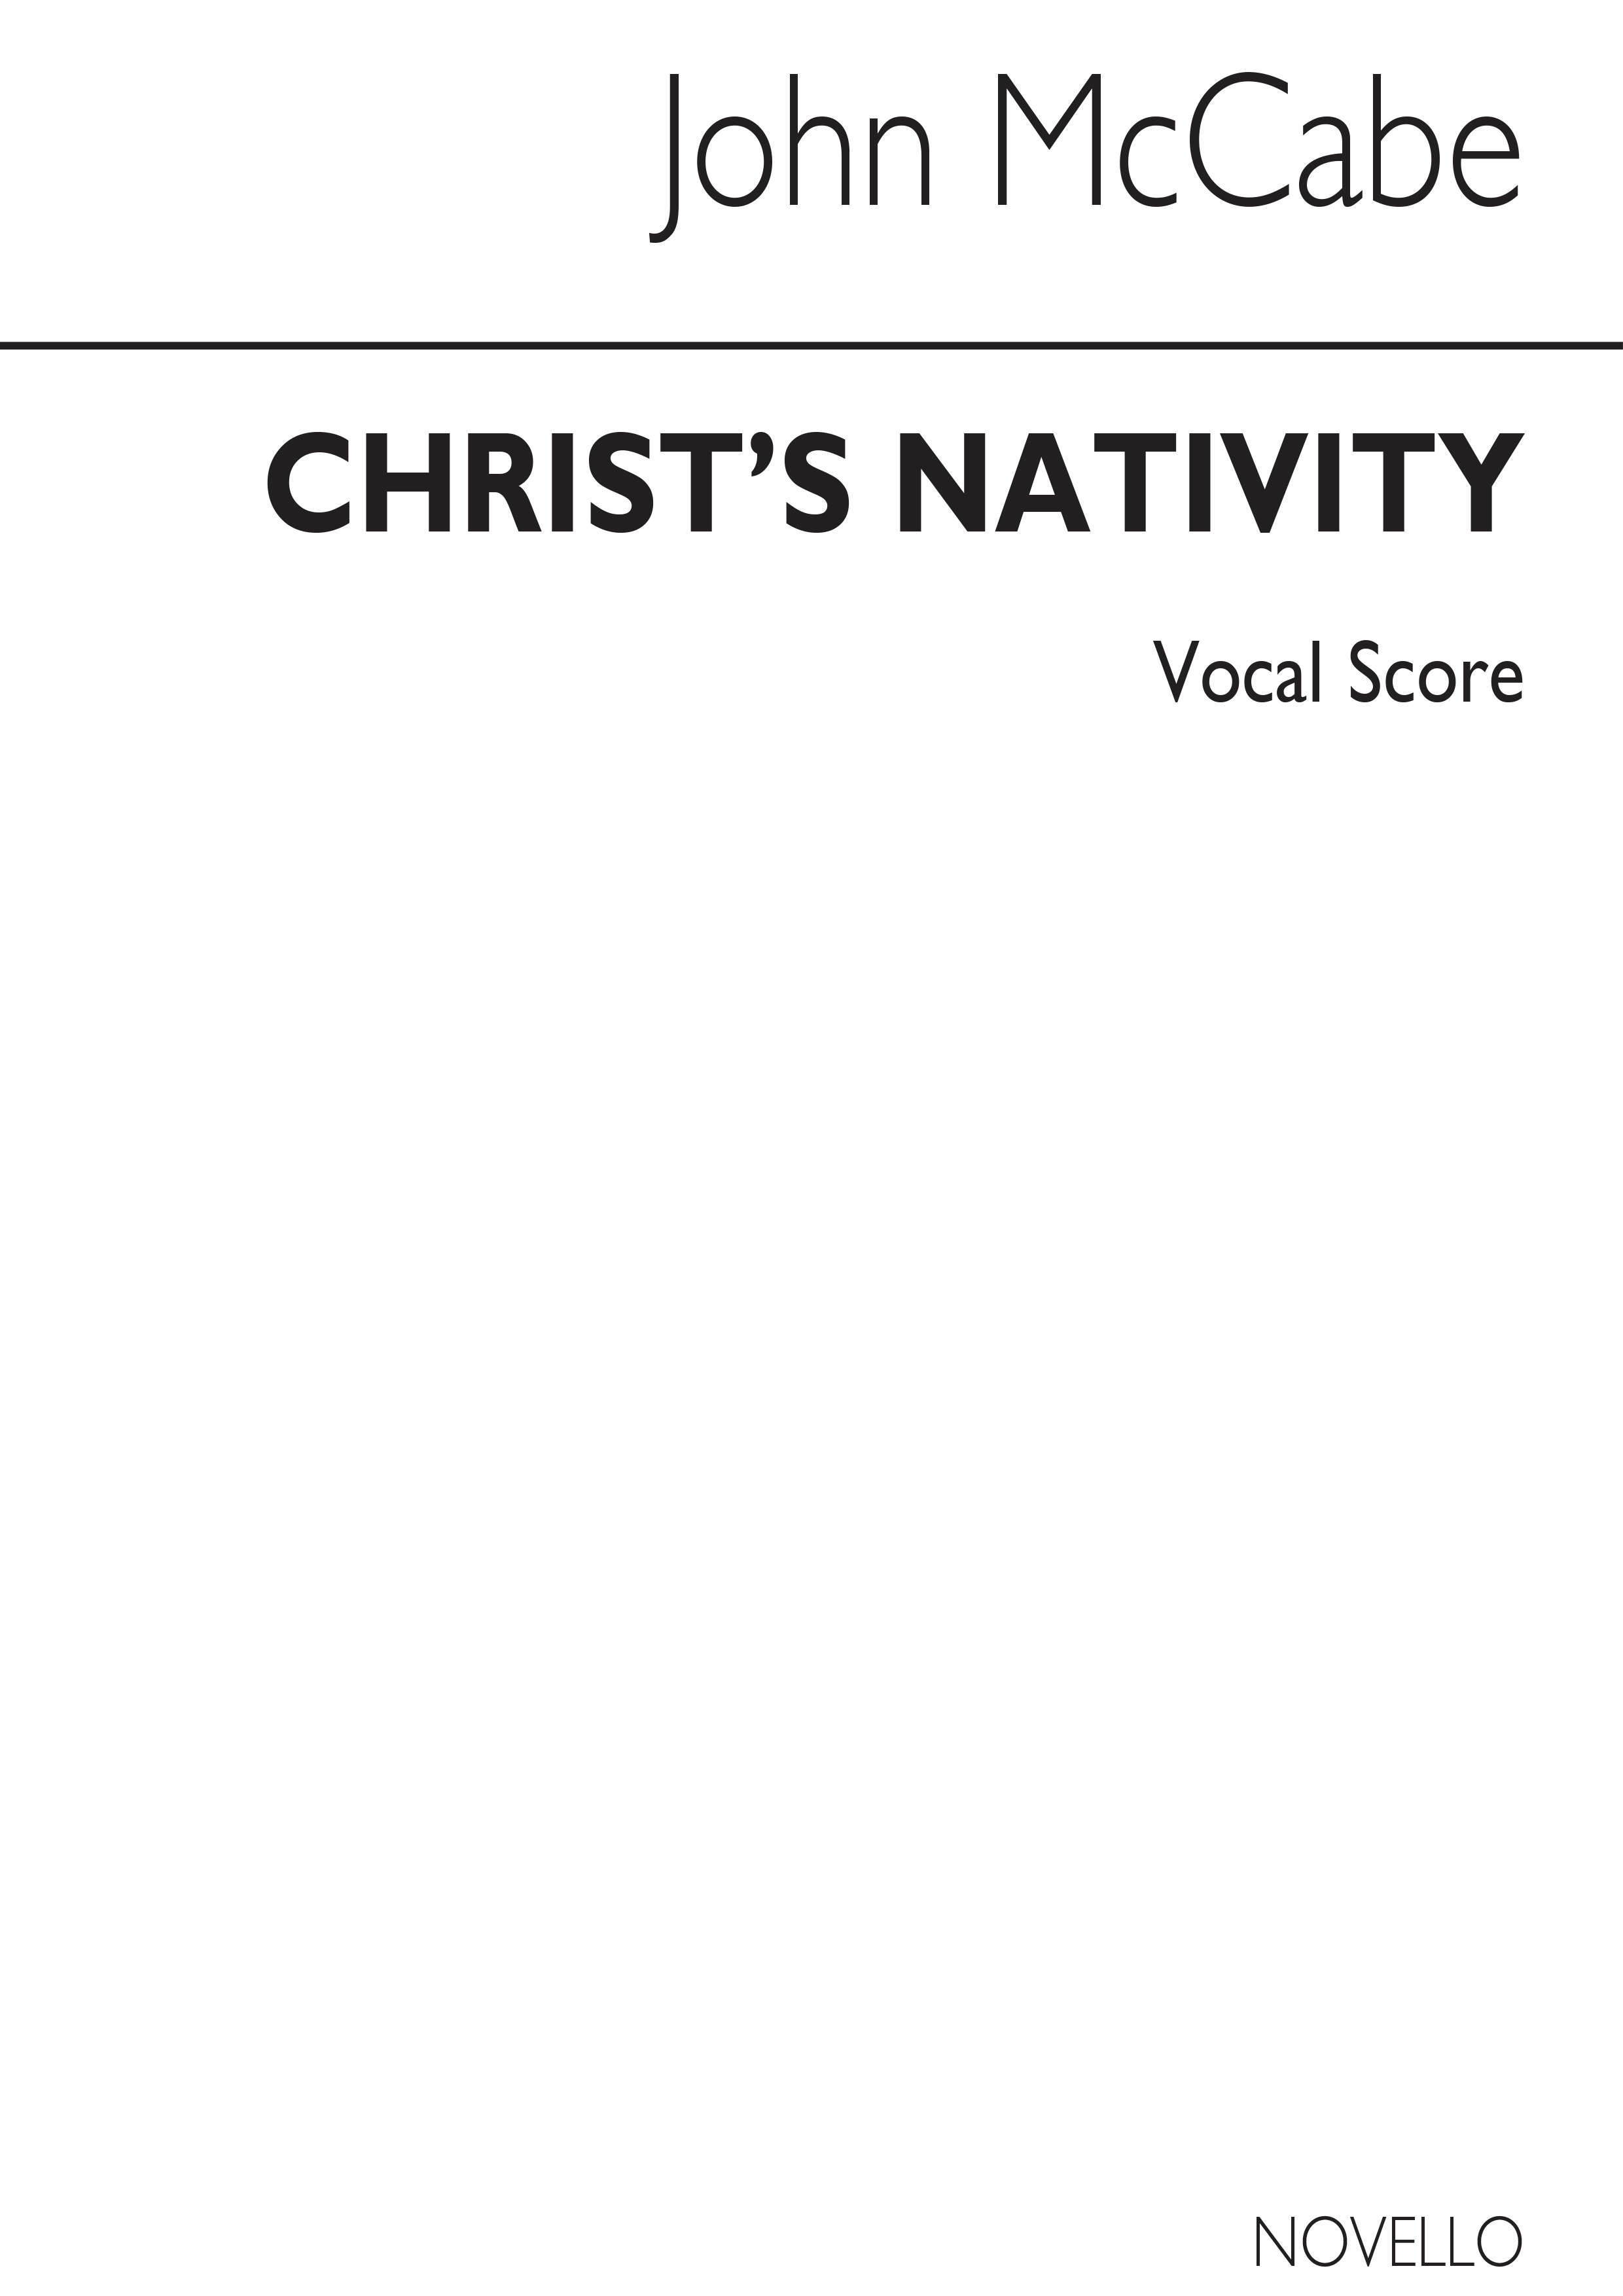 John McCabe: John McCabe: Christ's Nativity (Vocal Score): SATB: Vocal Score